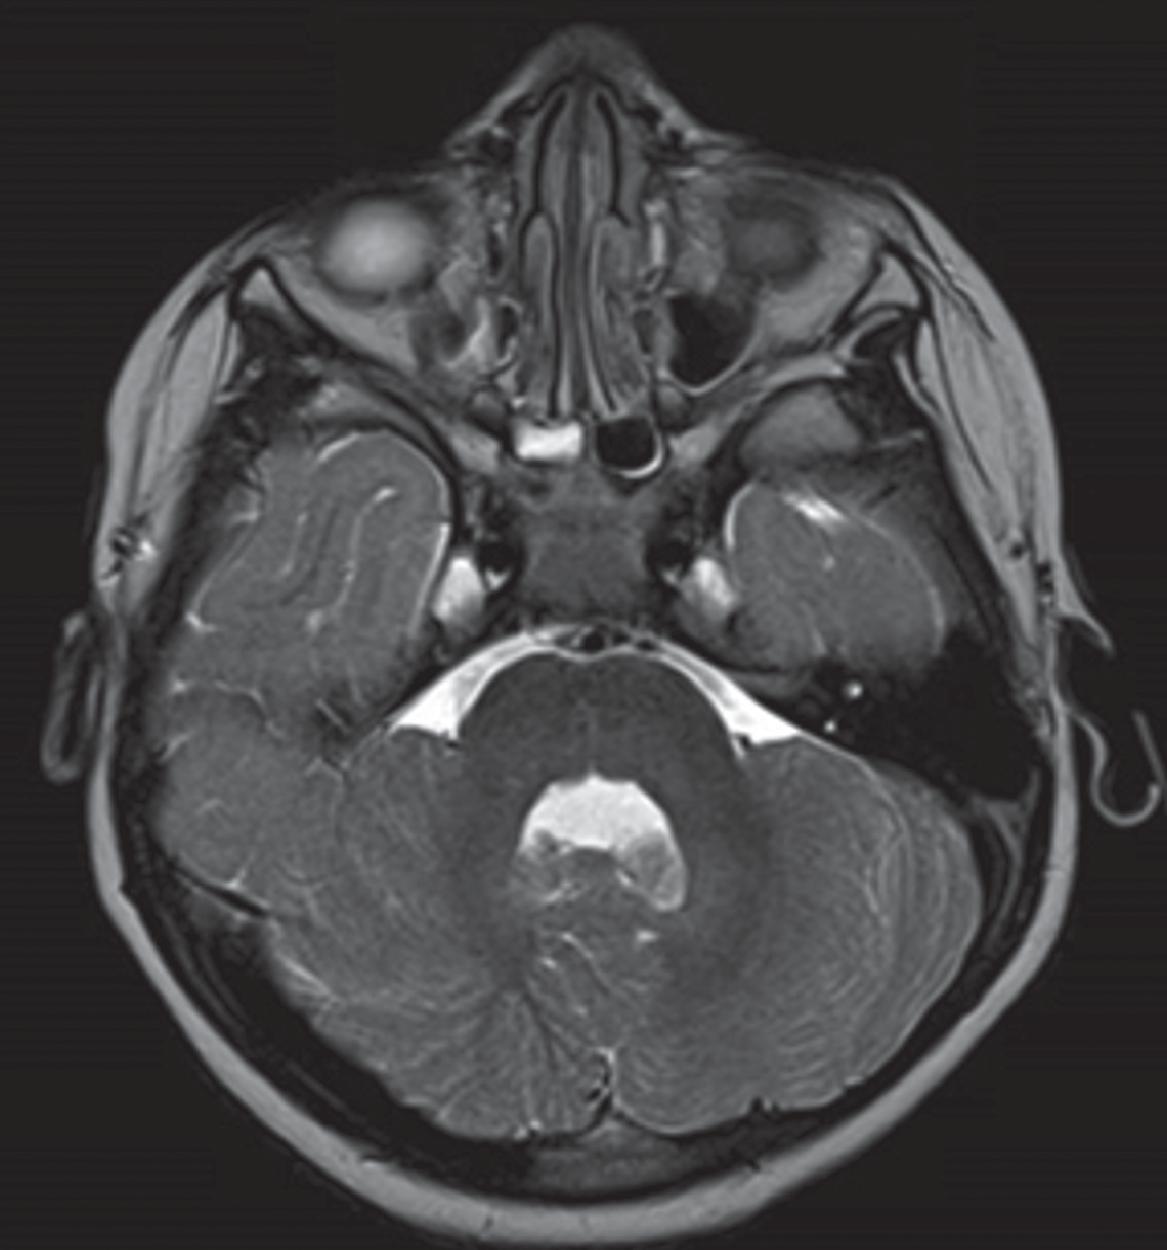 Unilateral Cerebellum Atrophy or Dysplasia